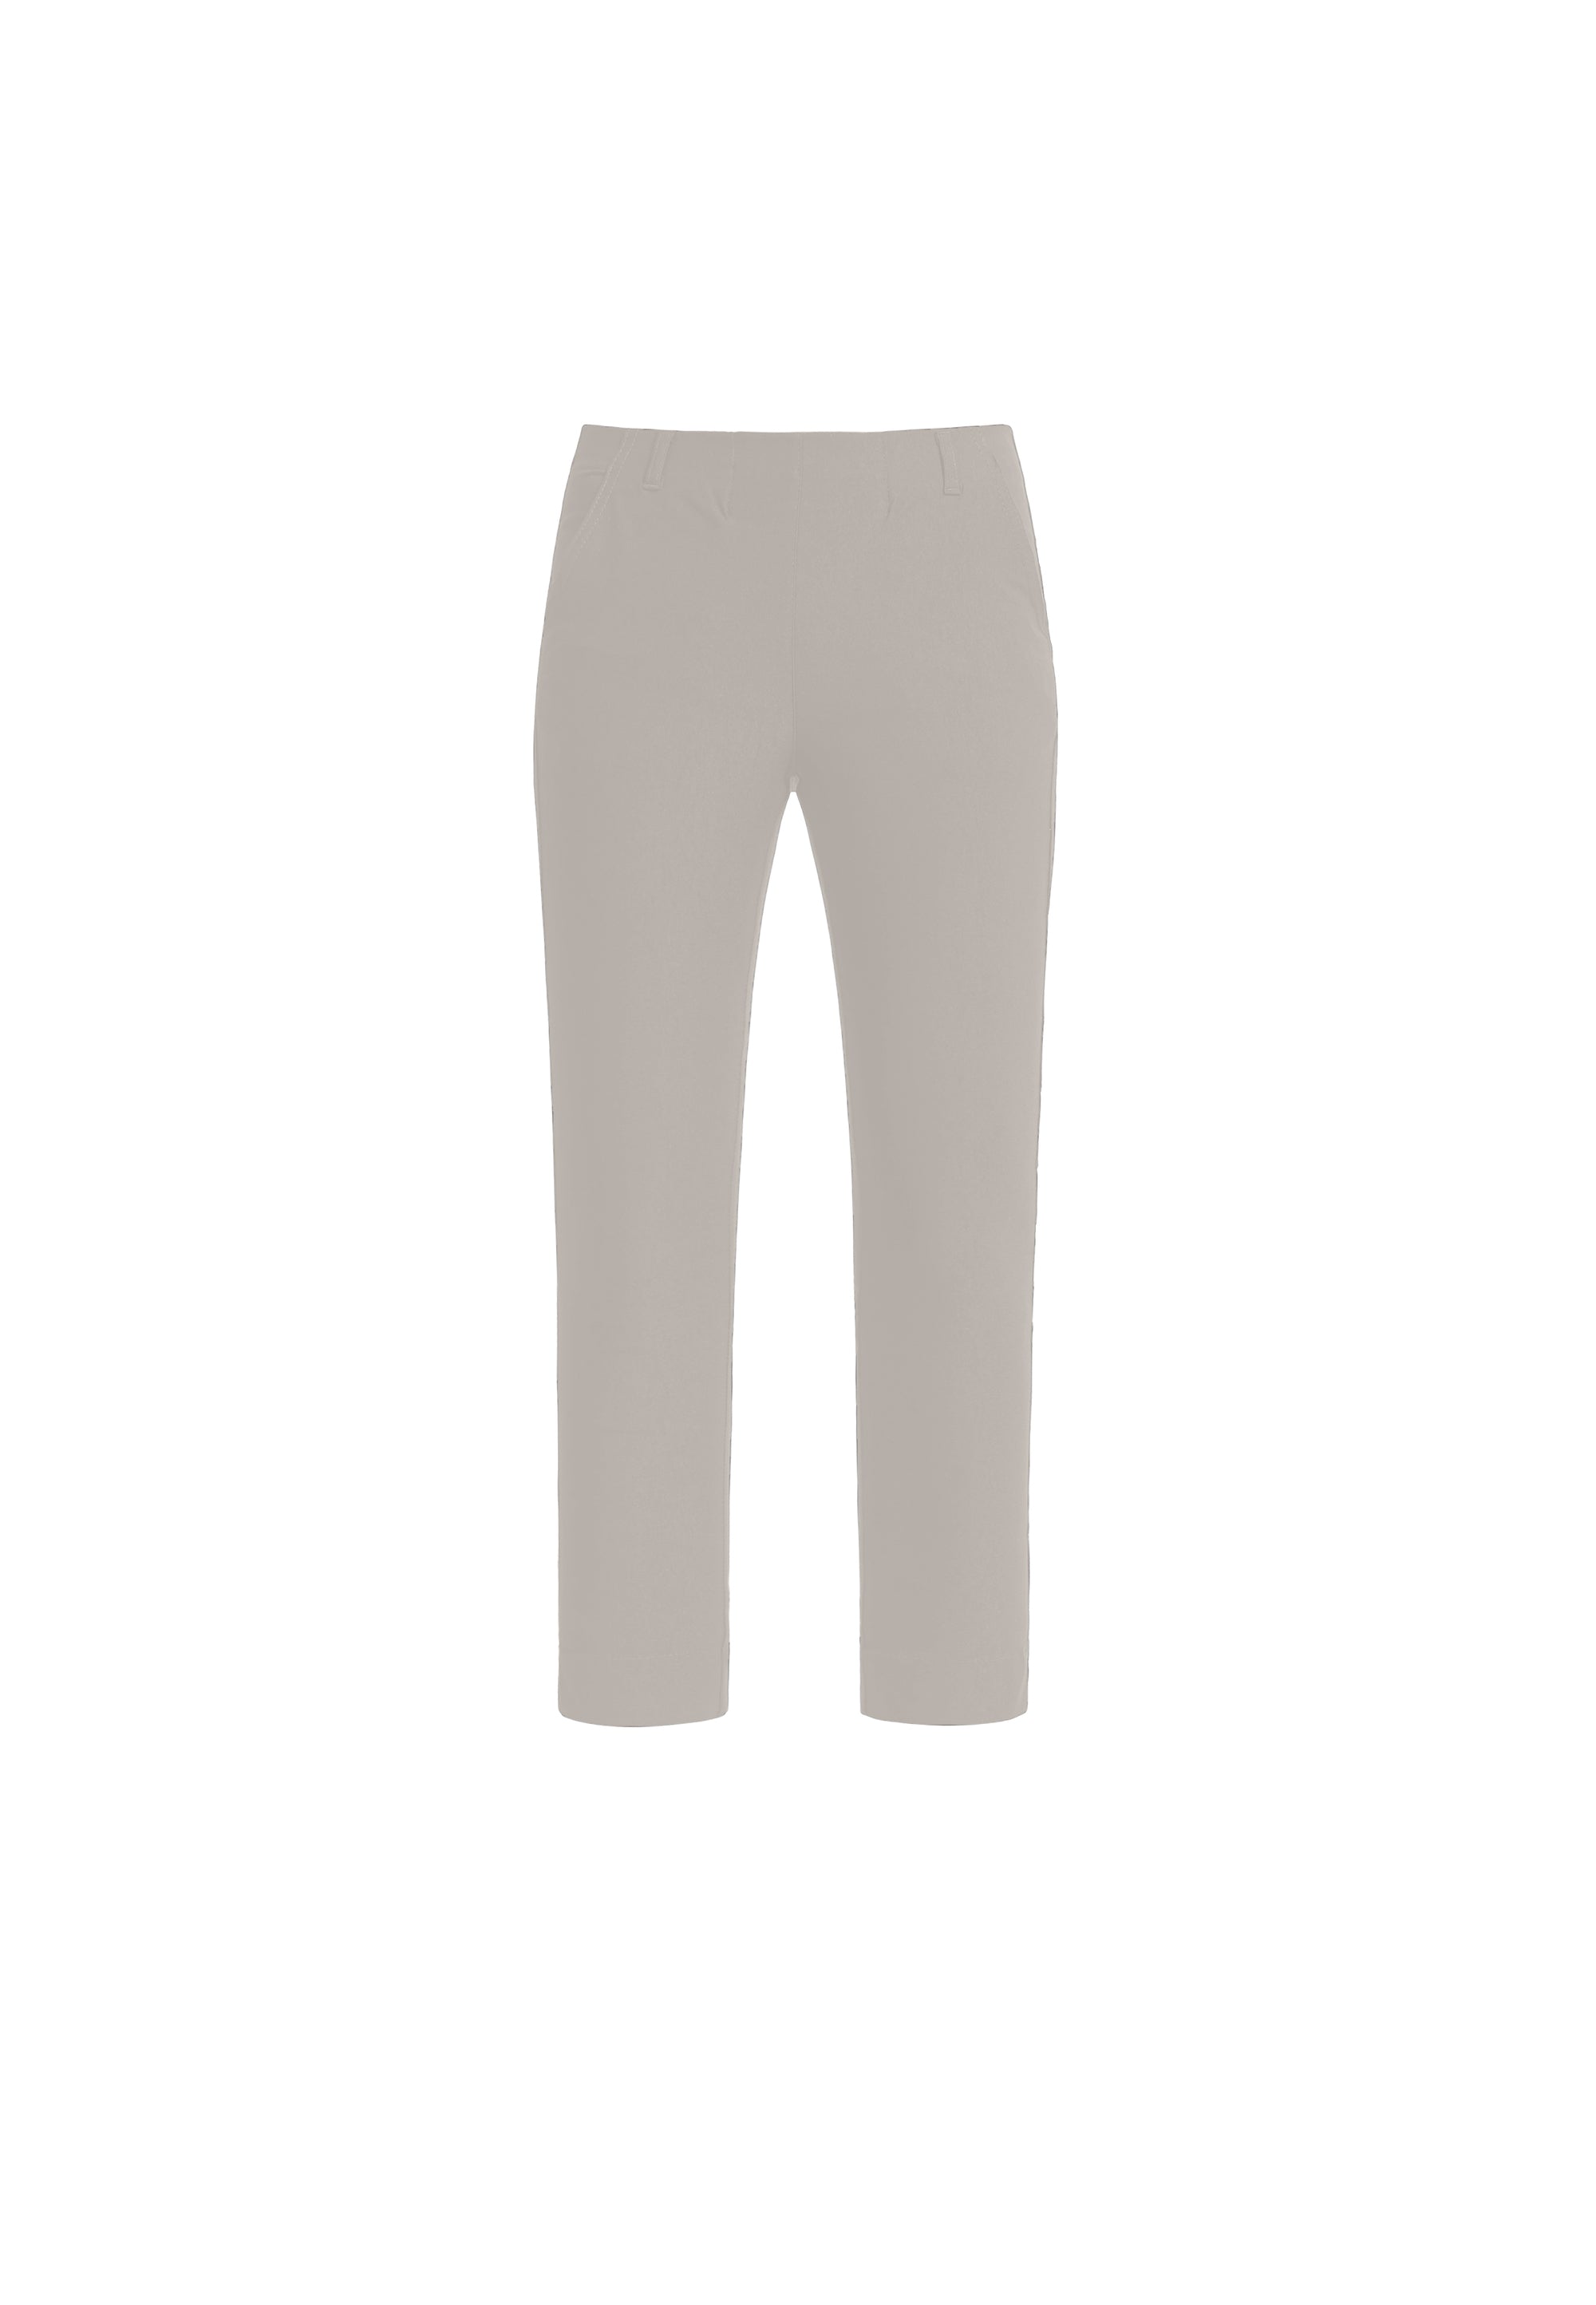 LAURIE Taylor Regular Crop Trousers REGULAR Grau sand